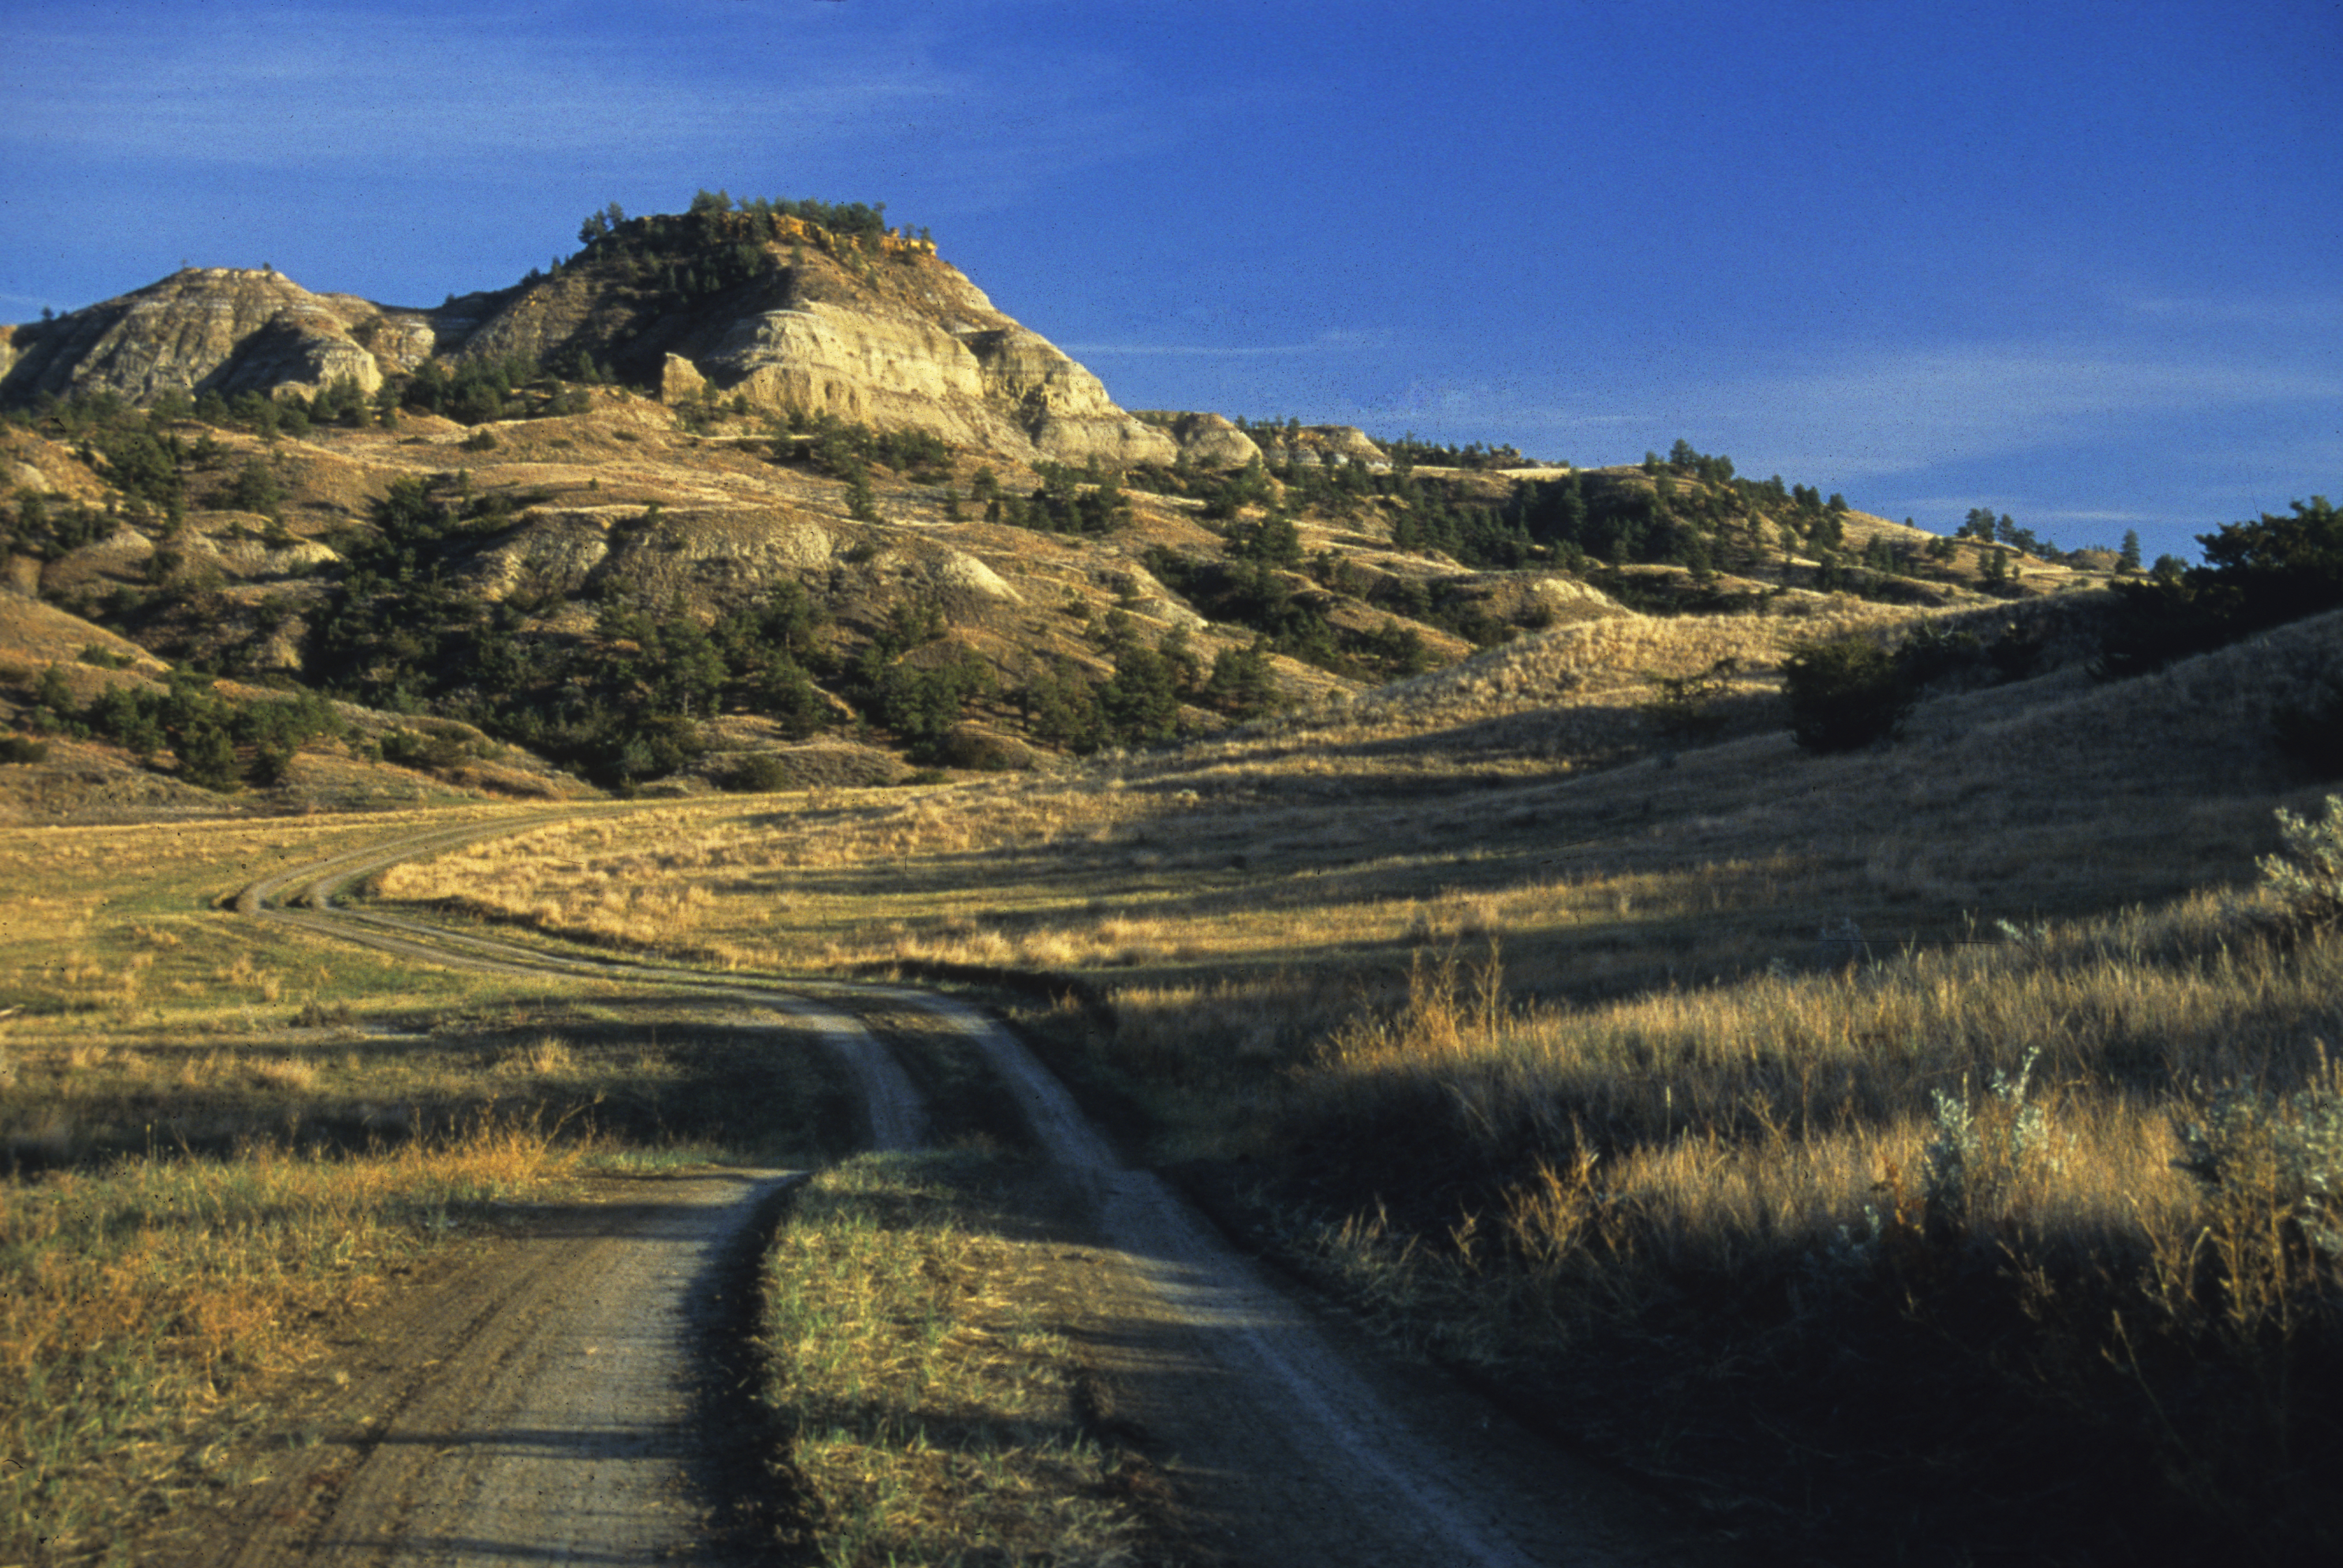 Montana's Lonesome Highway